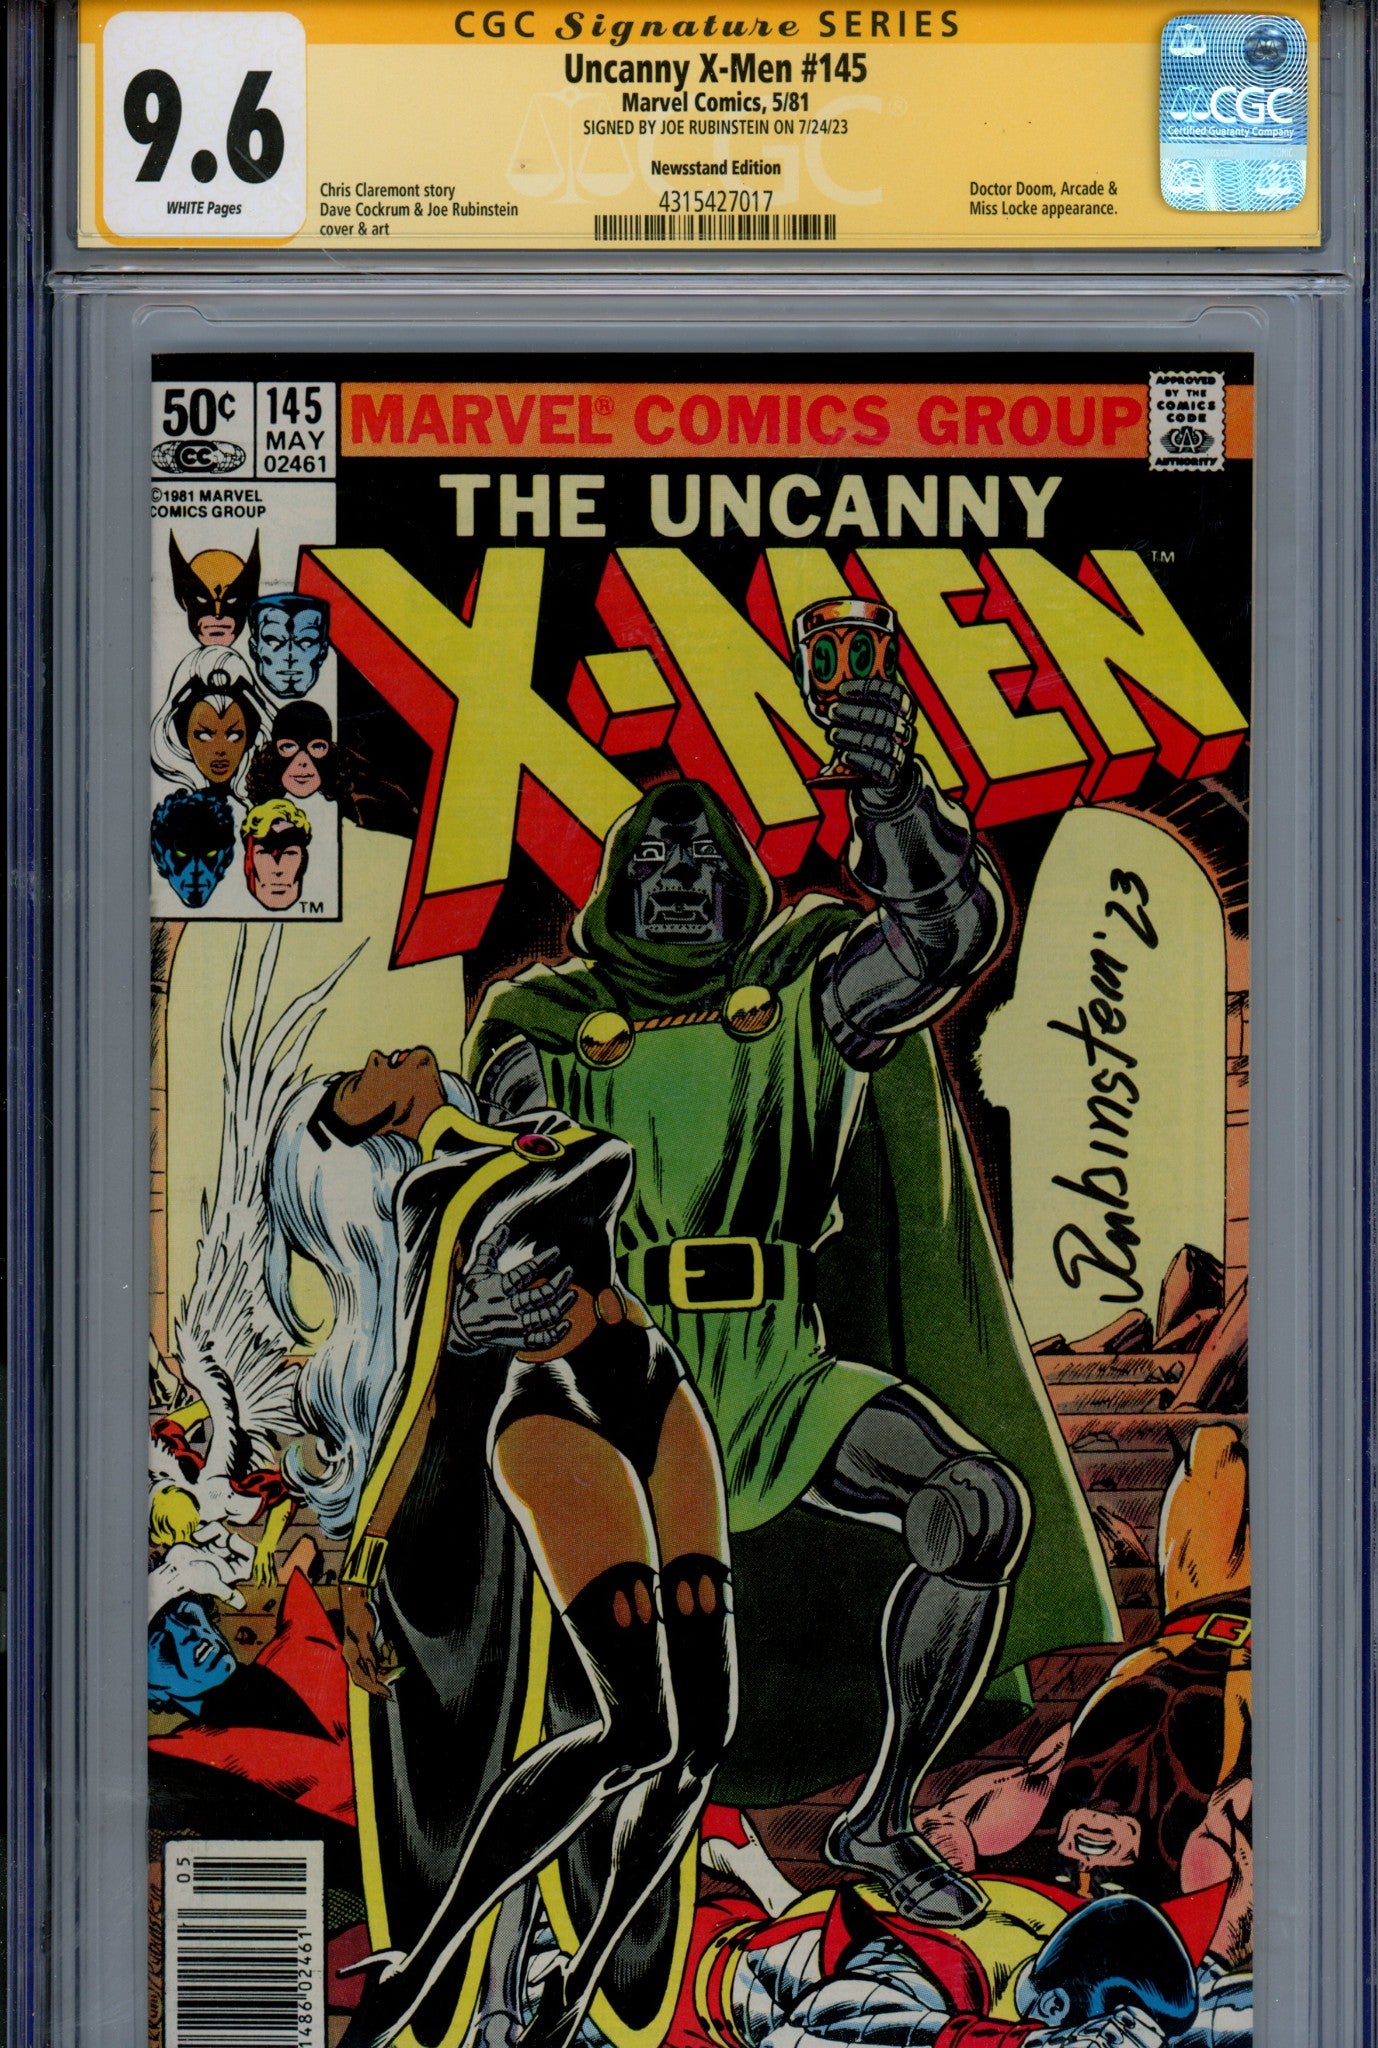 The Uncanny X-Men Vol 1 145 CGC 9.6 (NM+) (1981) Newsstand 